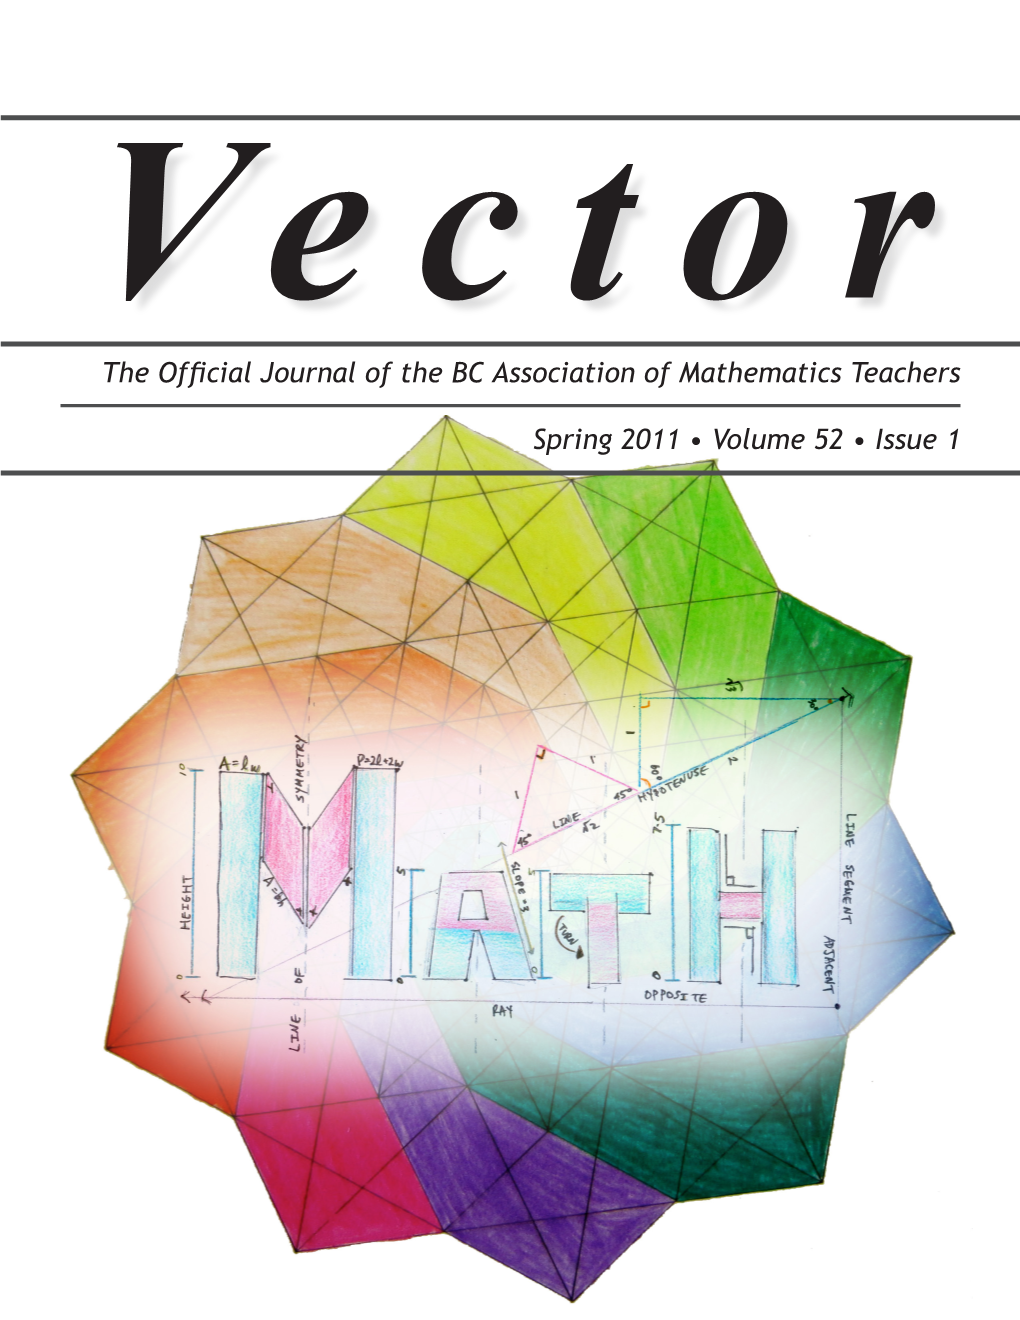 The Official Journal of the BC Association of Mathematics Teachers